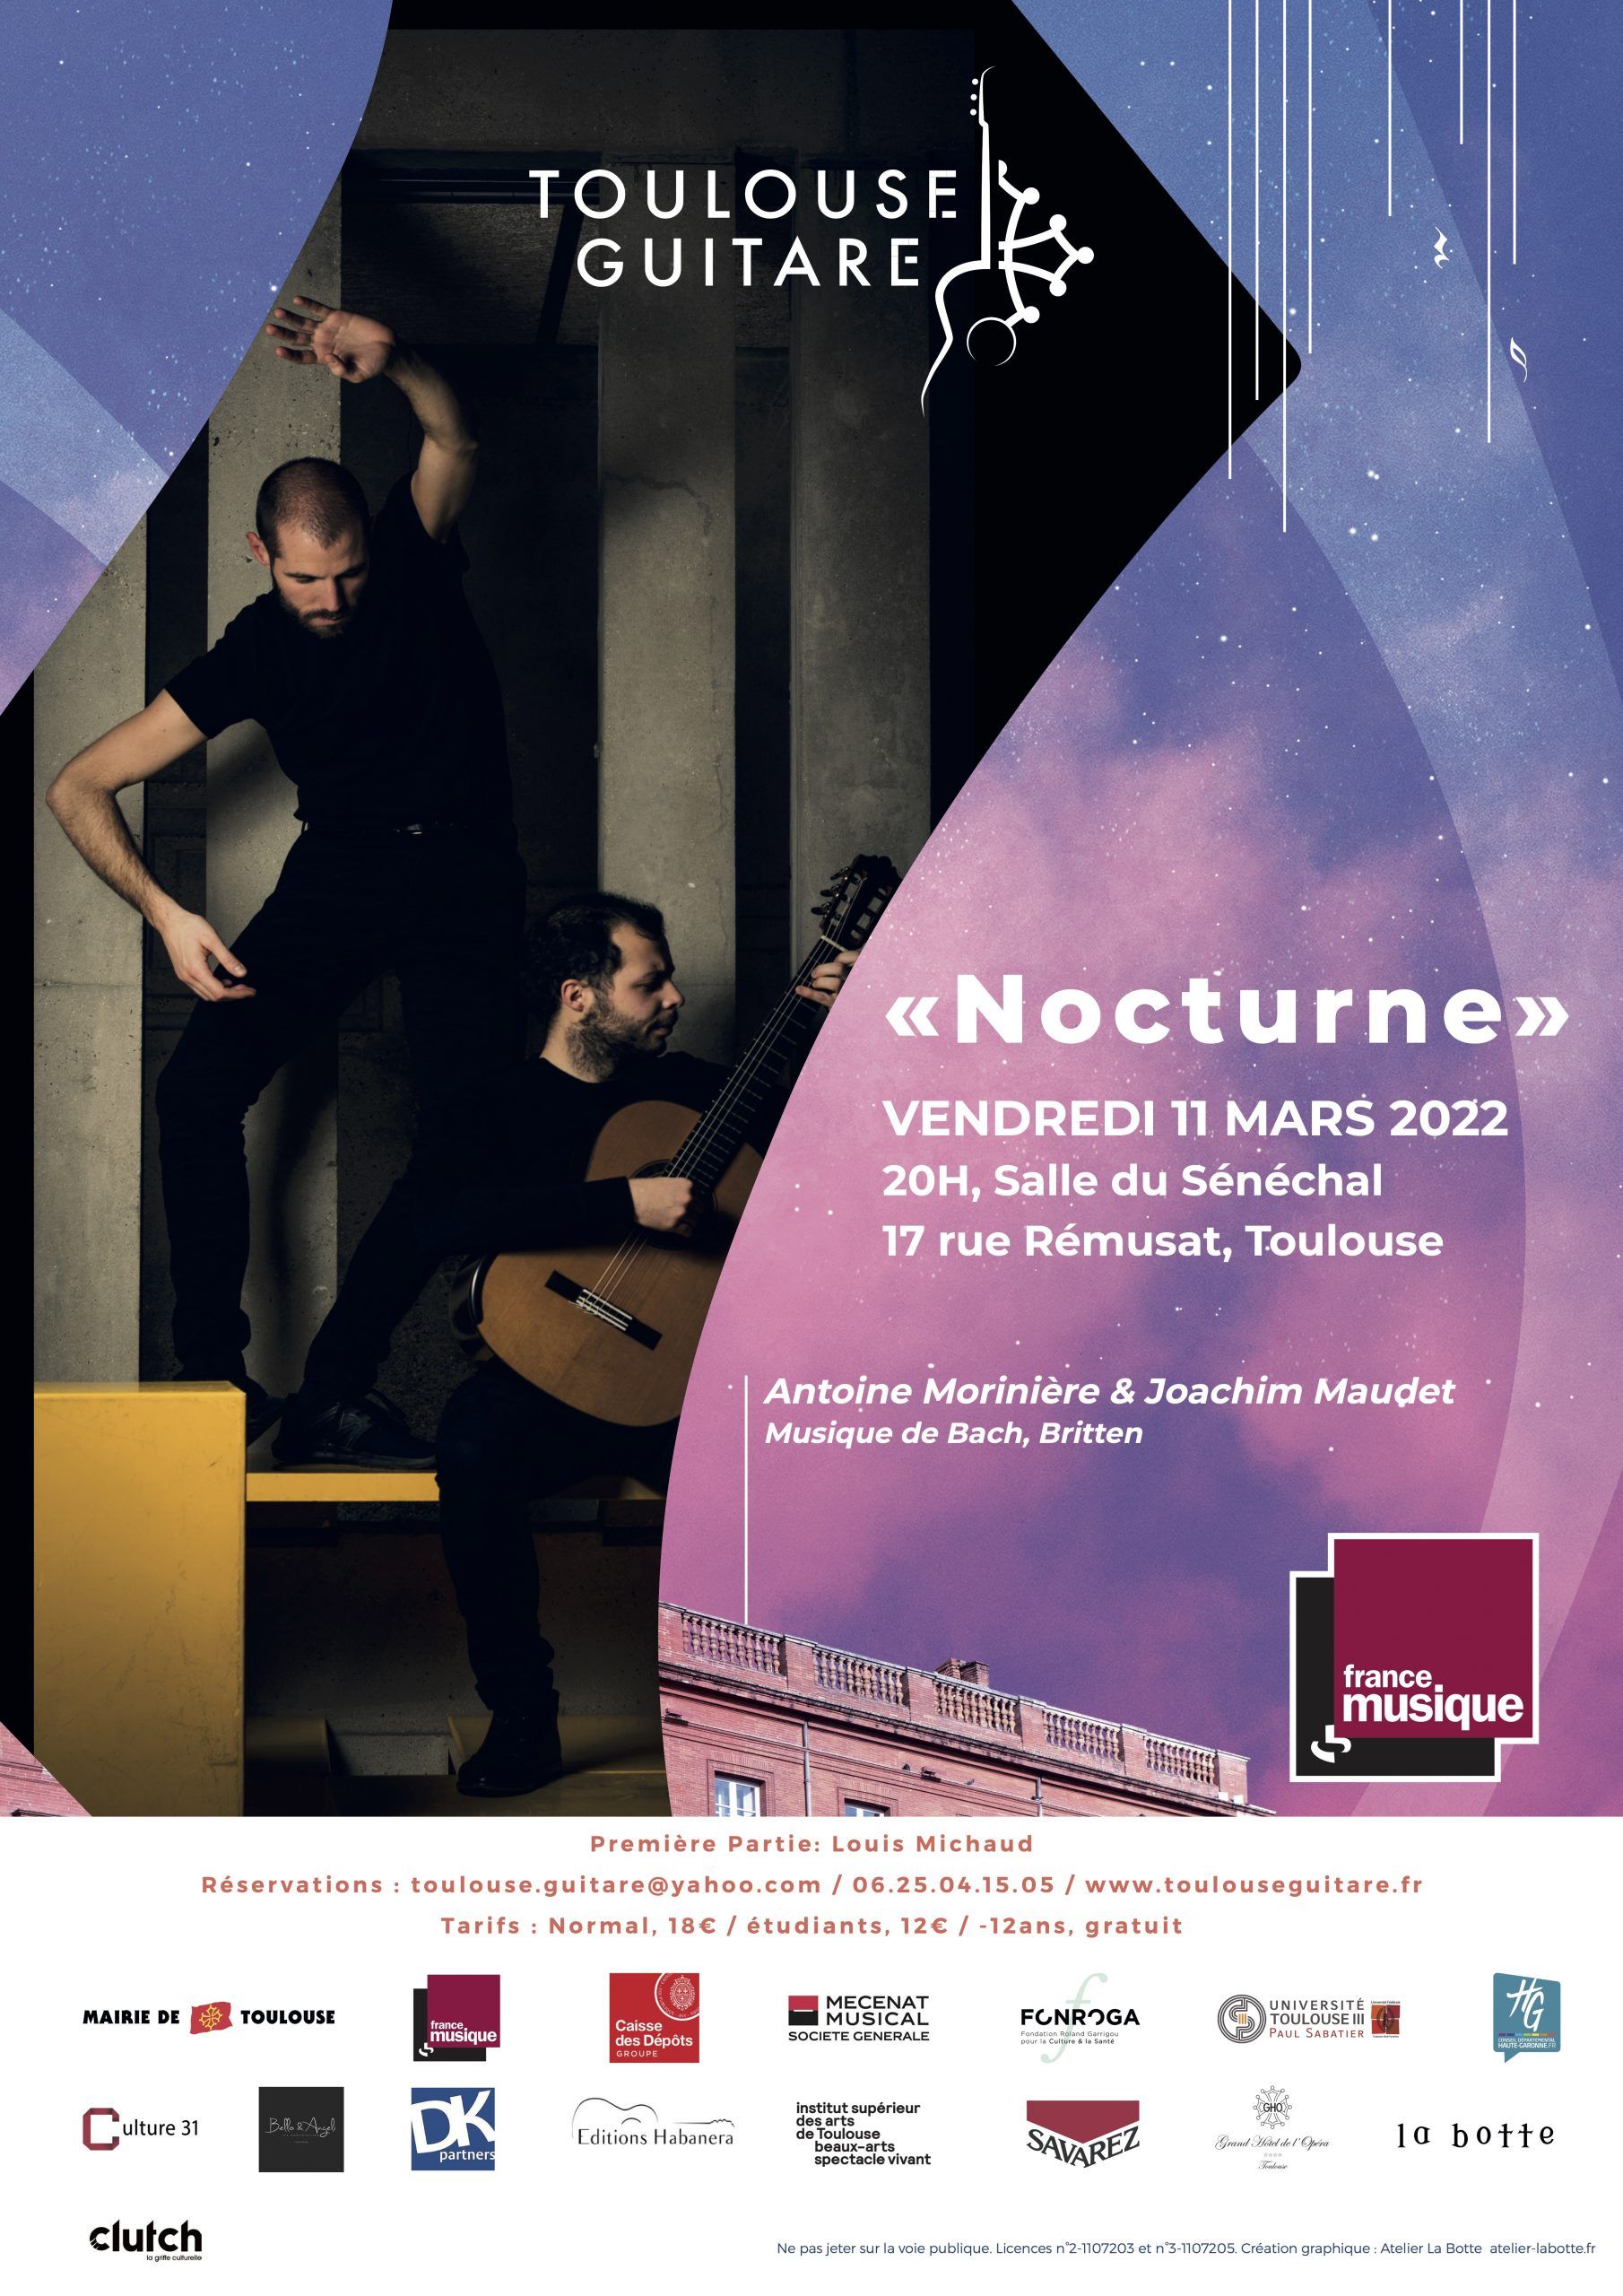 Toulouse Guitare - Nocturne